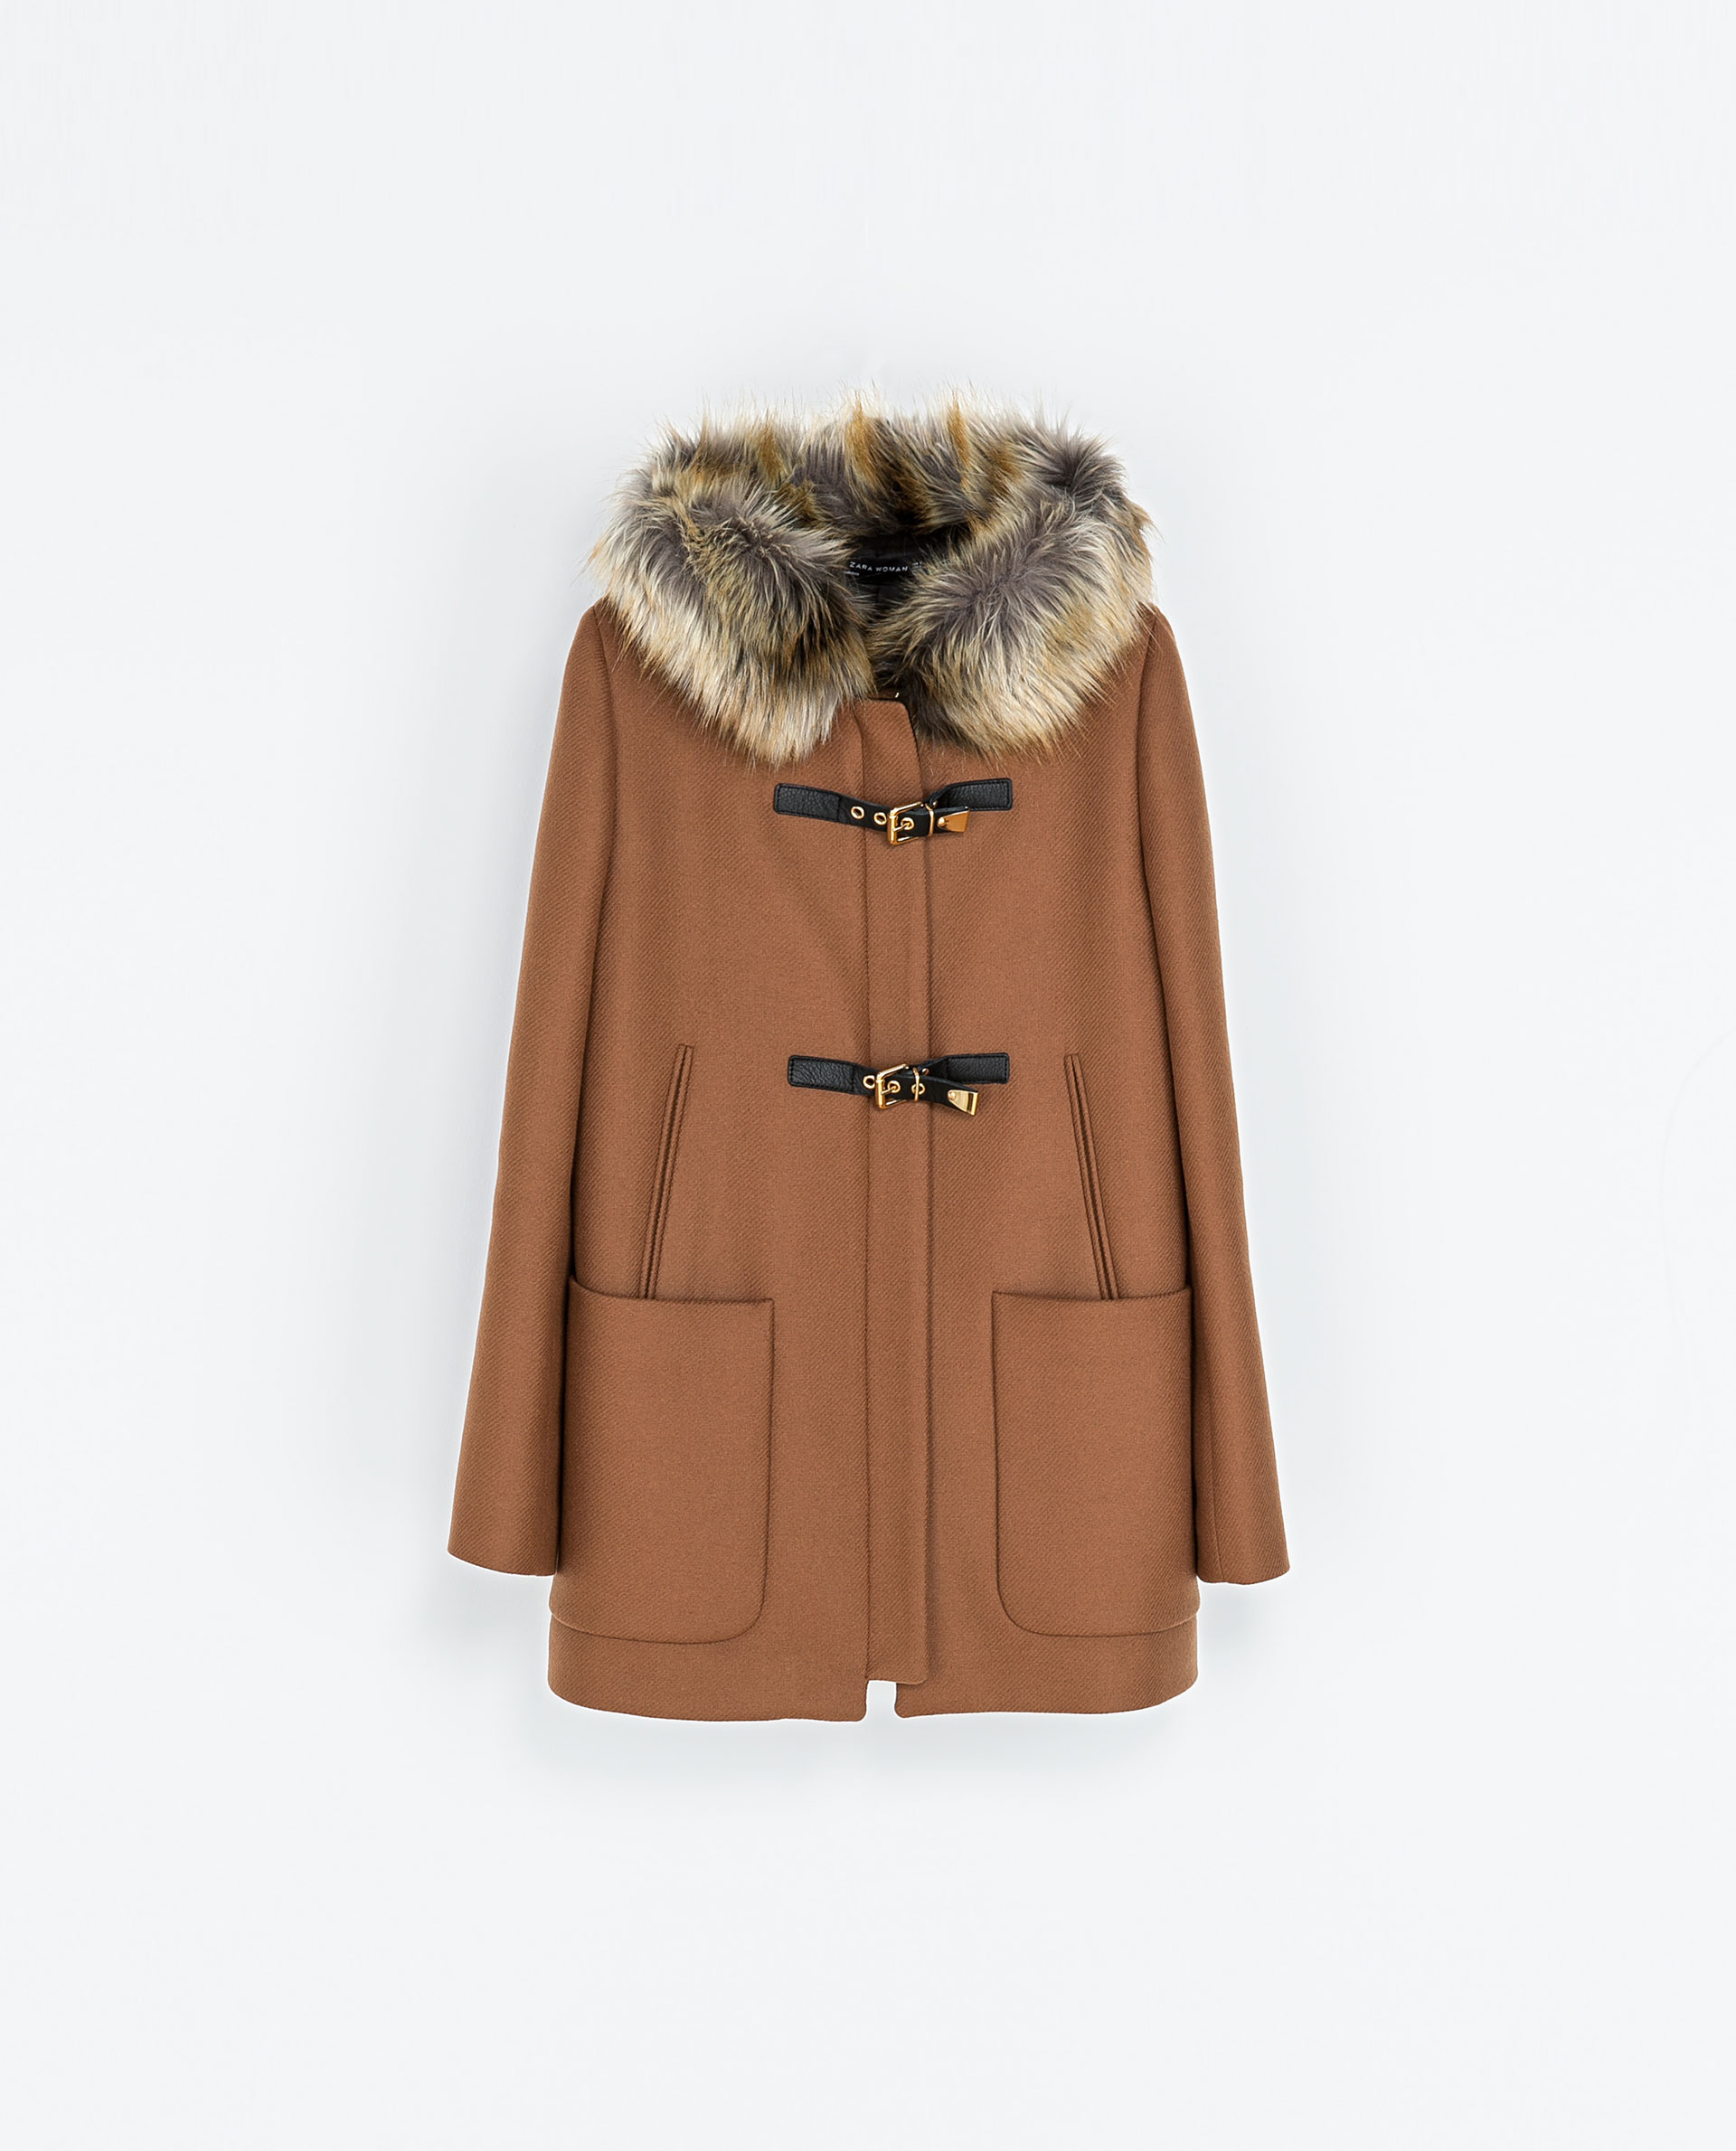 Zara Duffle Coat with Fur Hood in Brown (Caramel) | Lyst